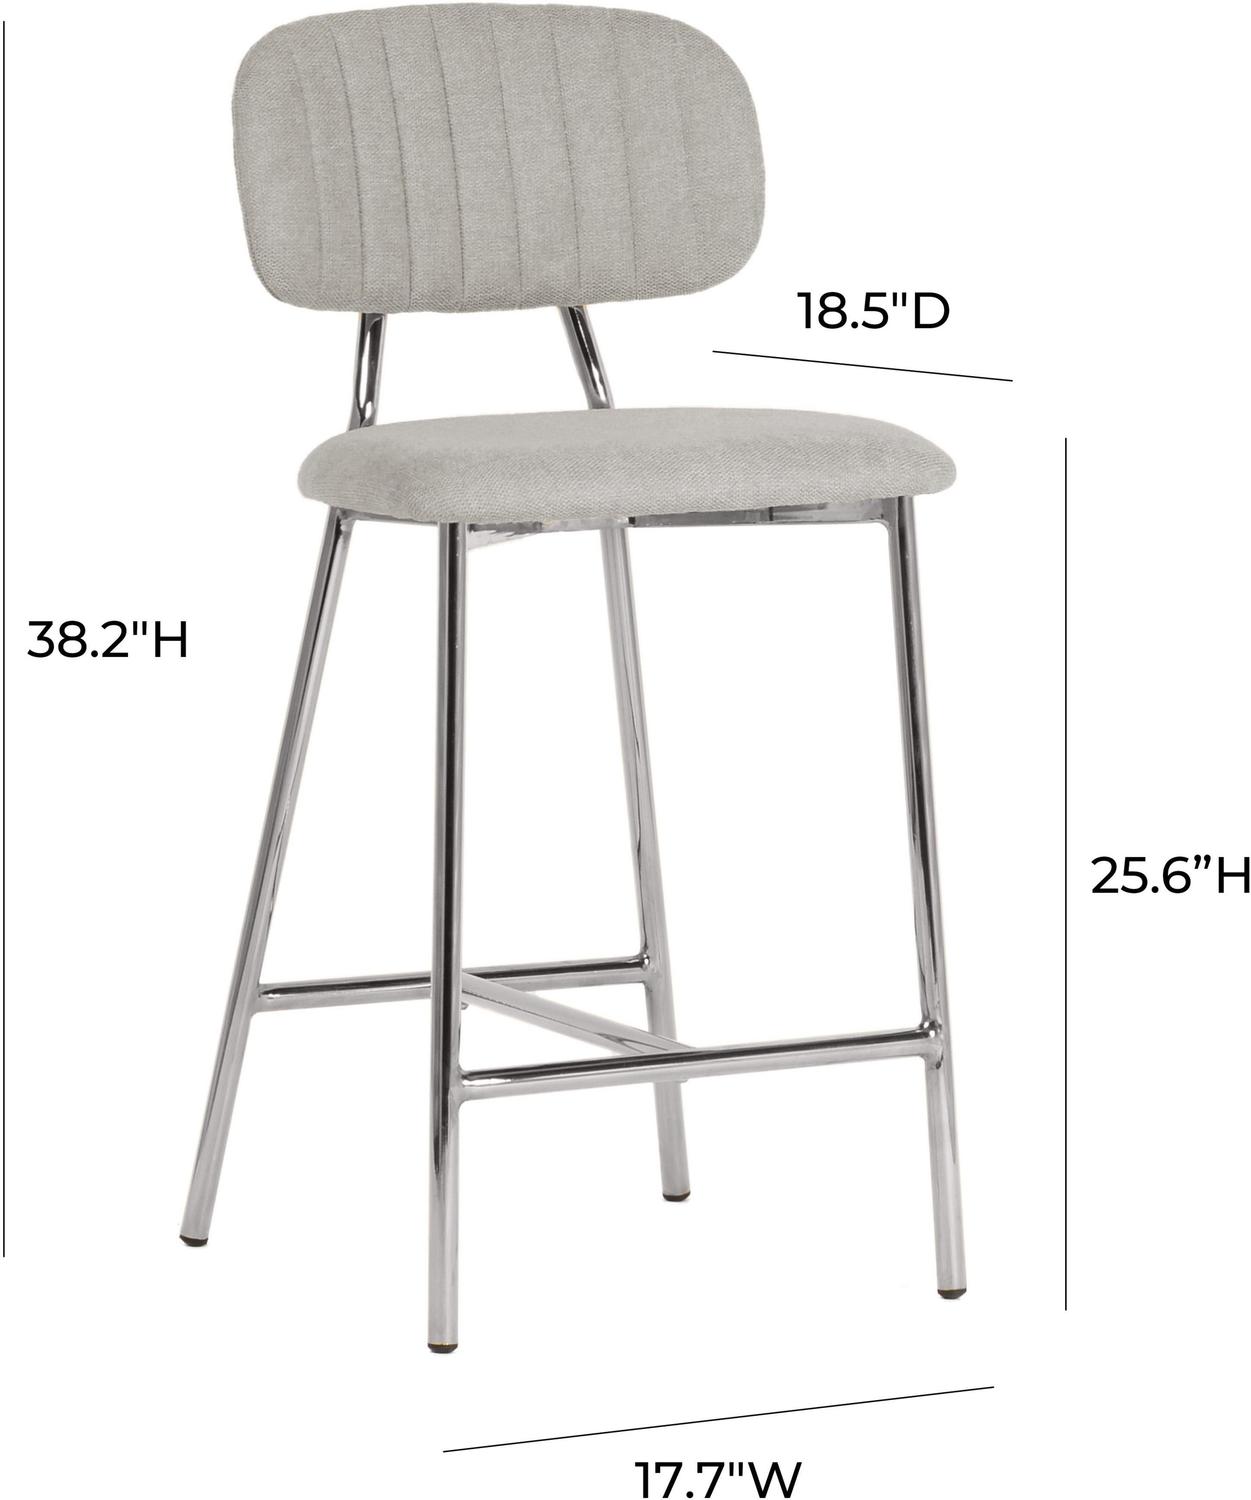 dark leather bar stools Tov Furniture Stools Grey